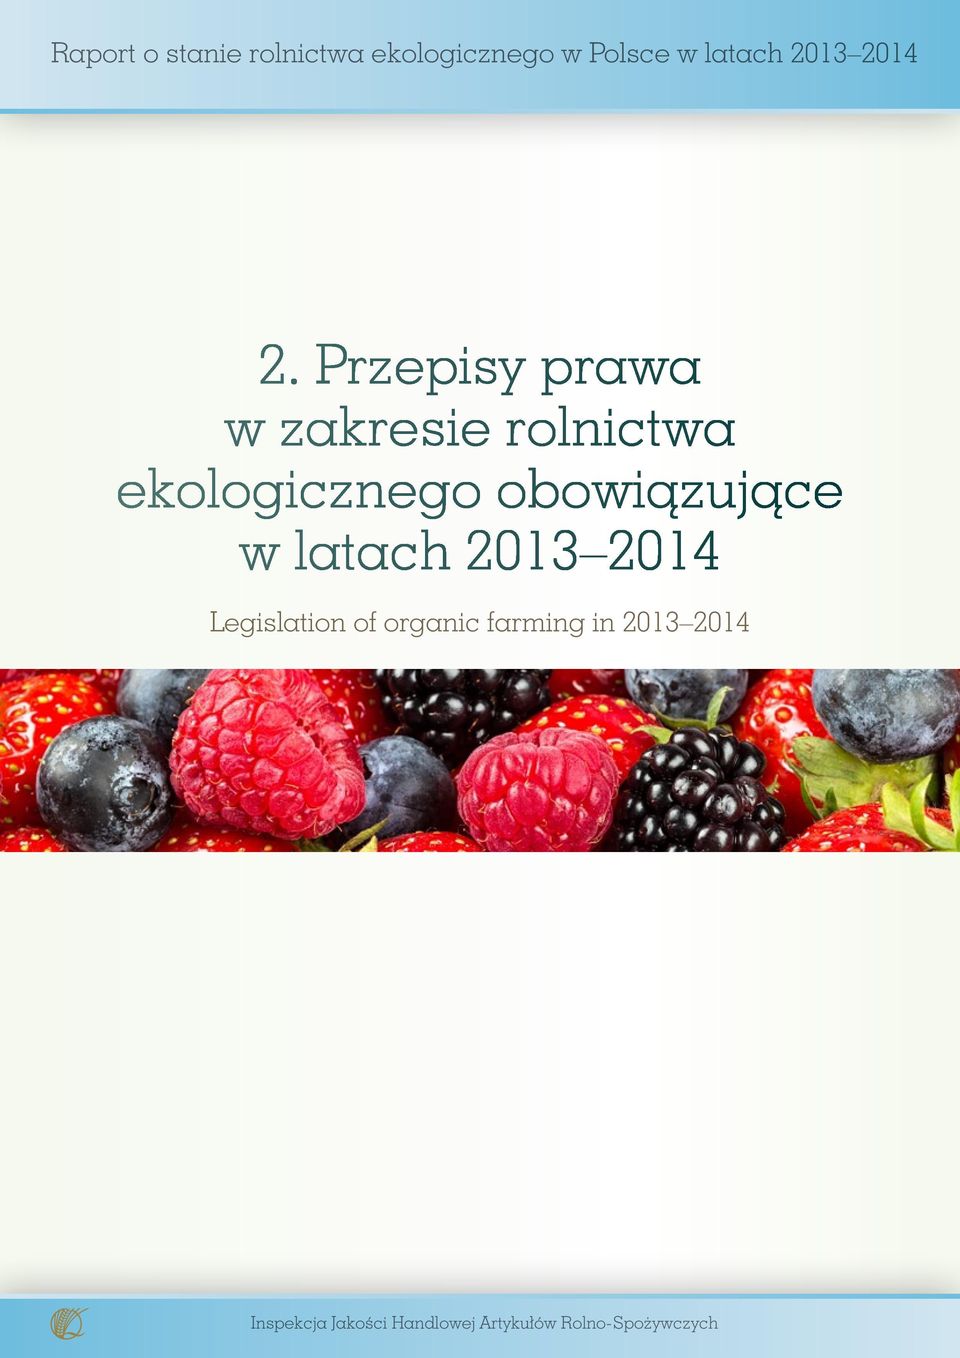 Legislation of organic farming in 2013 2014